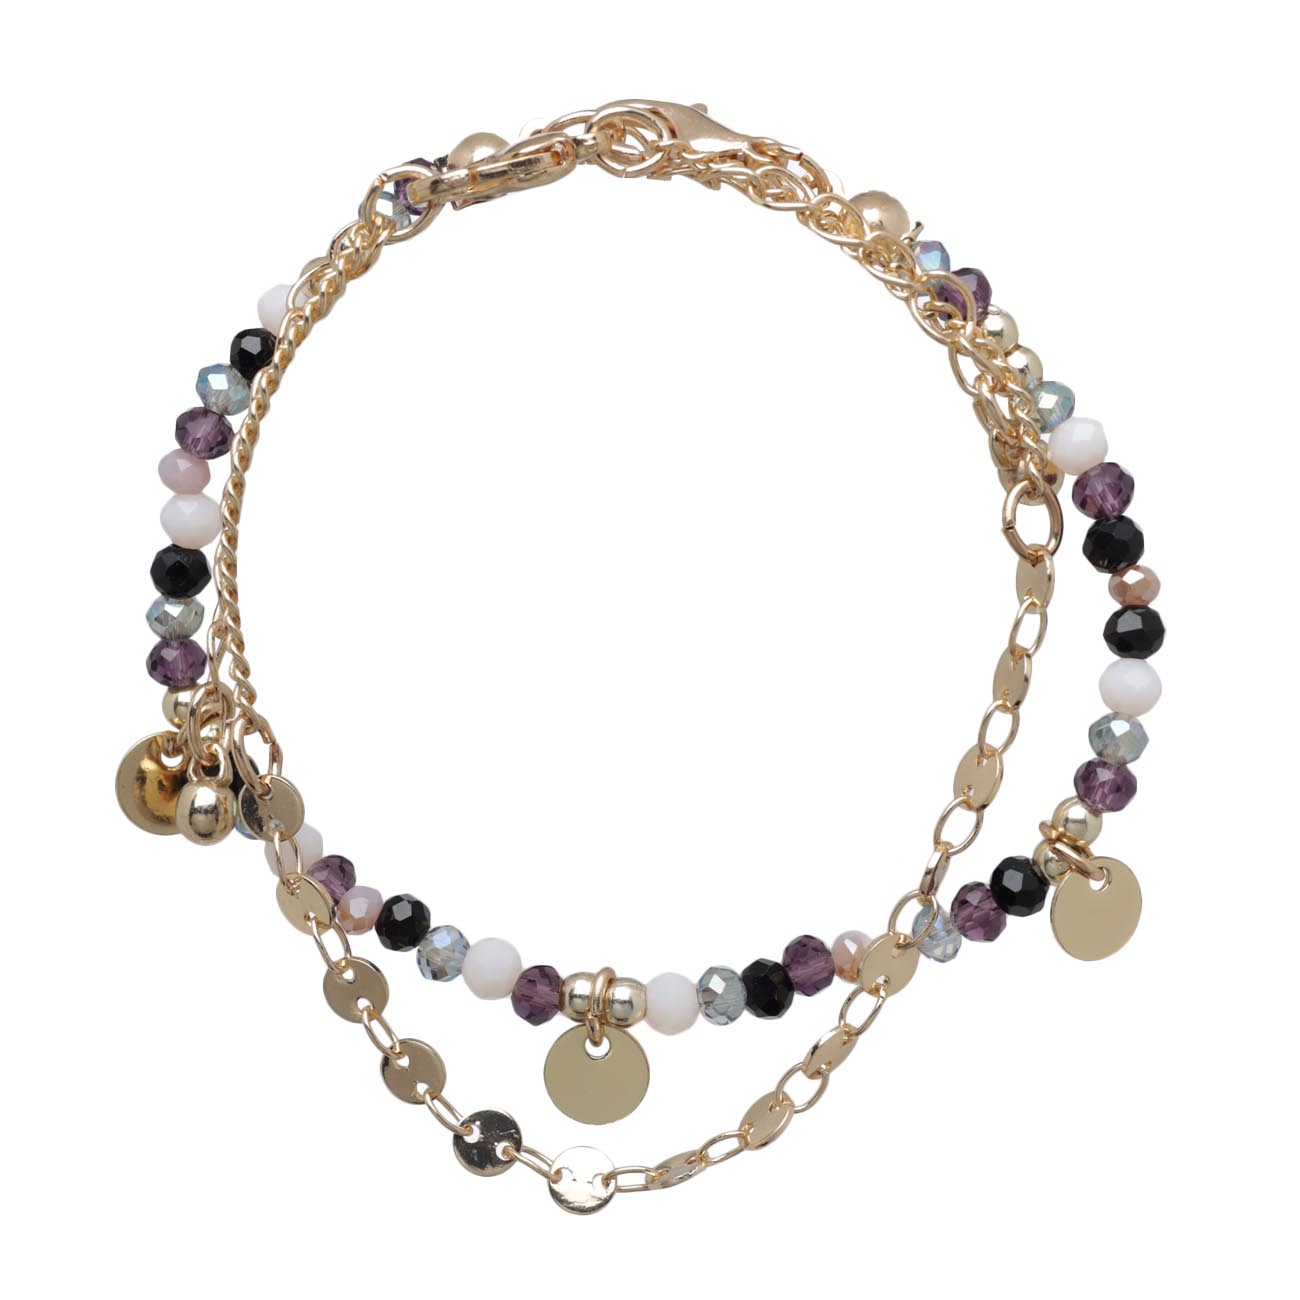 Bracelet, 6 cm, 2 pieces, metal / plastic, gold, Colored stones, Mineral изображение № 2